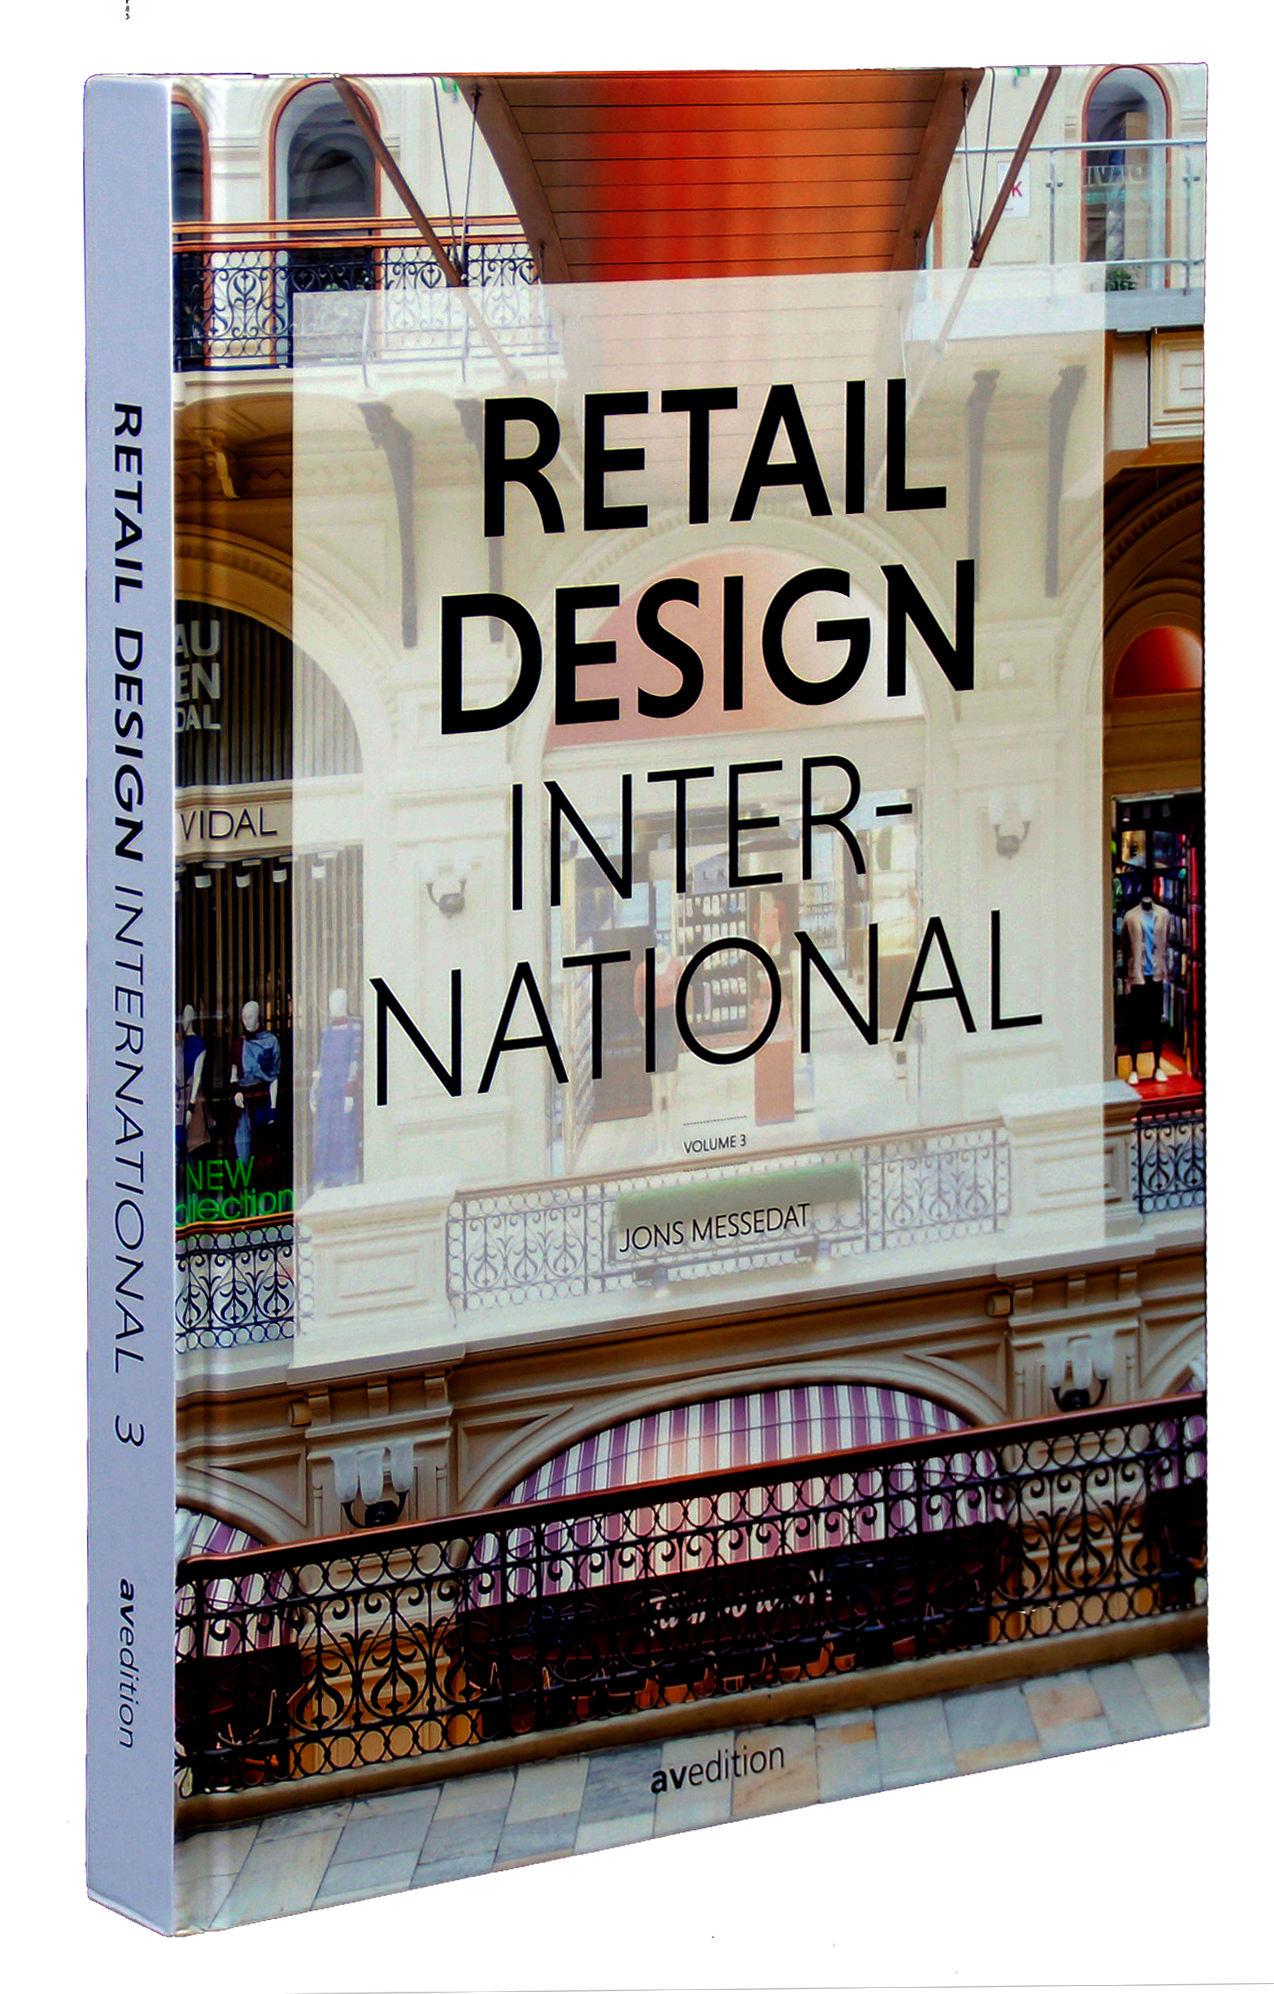 Retail Design International Vol. 3 – Components, Spaces, Buildings